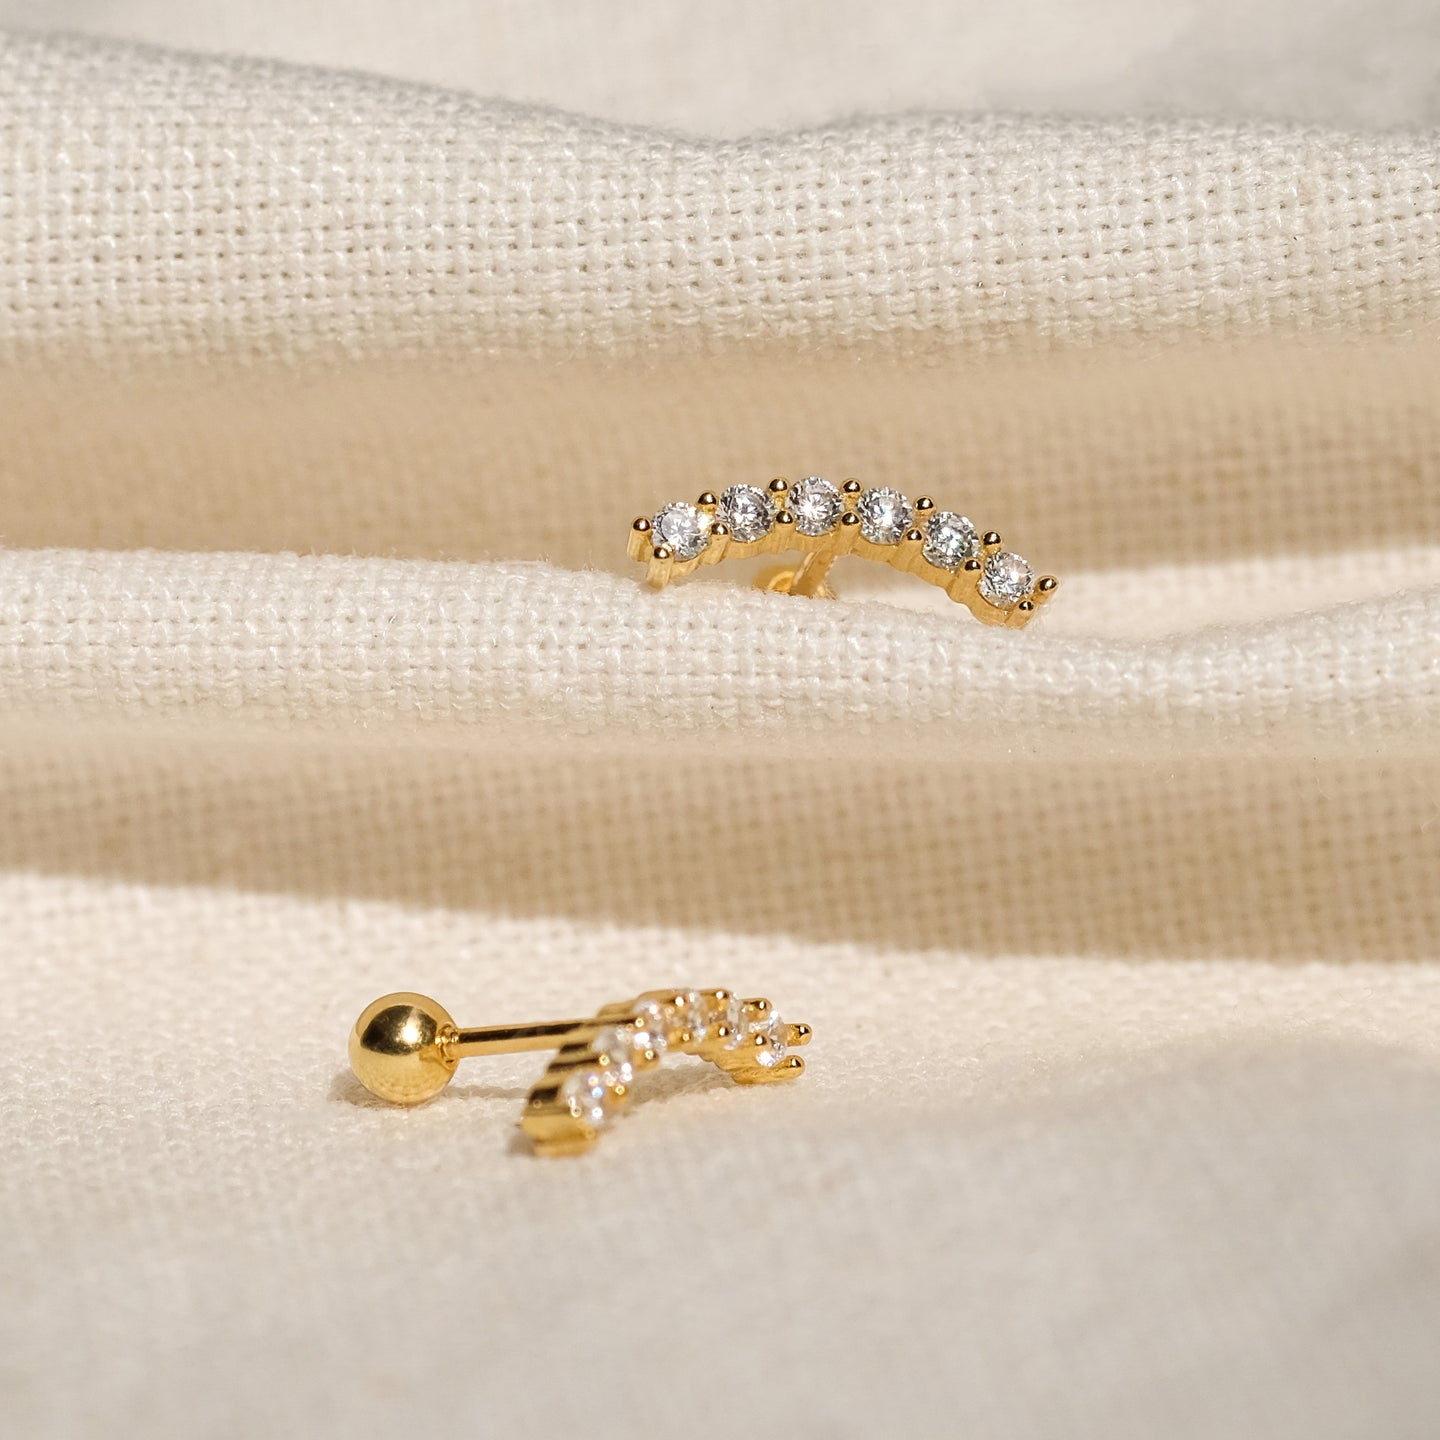 products/vana-cz-stud-earrings-18k-gold-vermeill-clear-stone-1.jpg